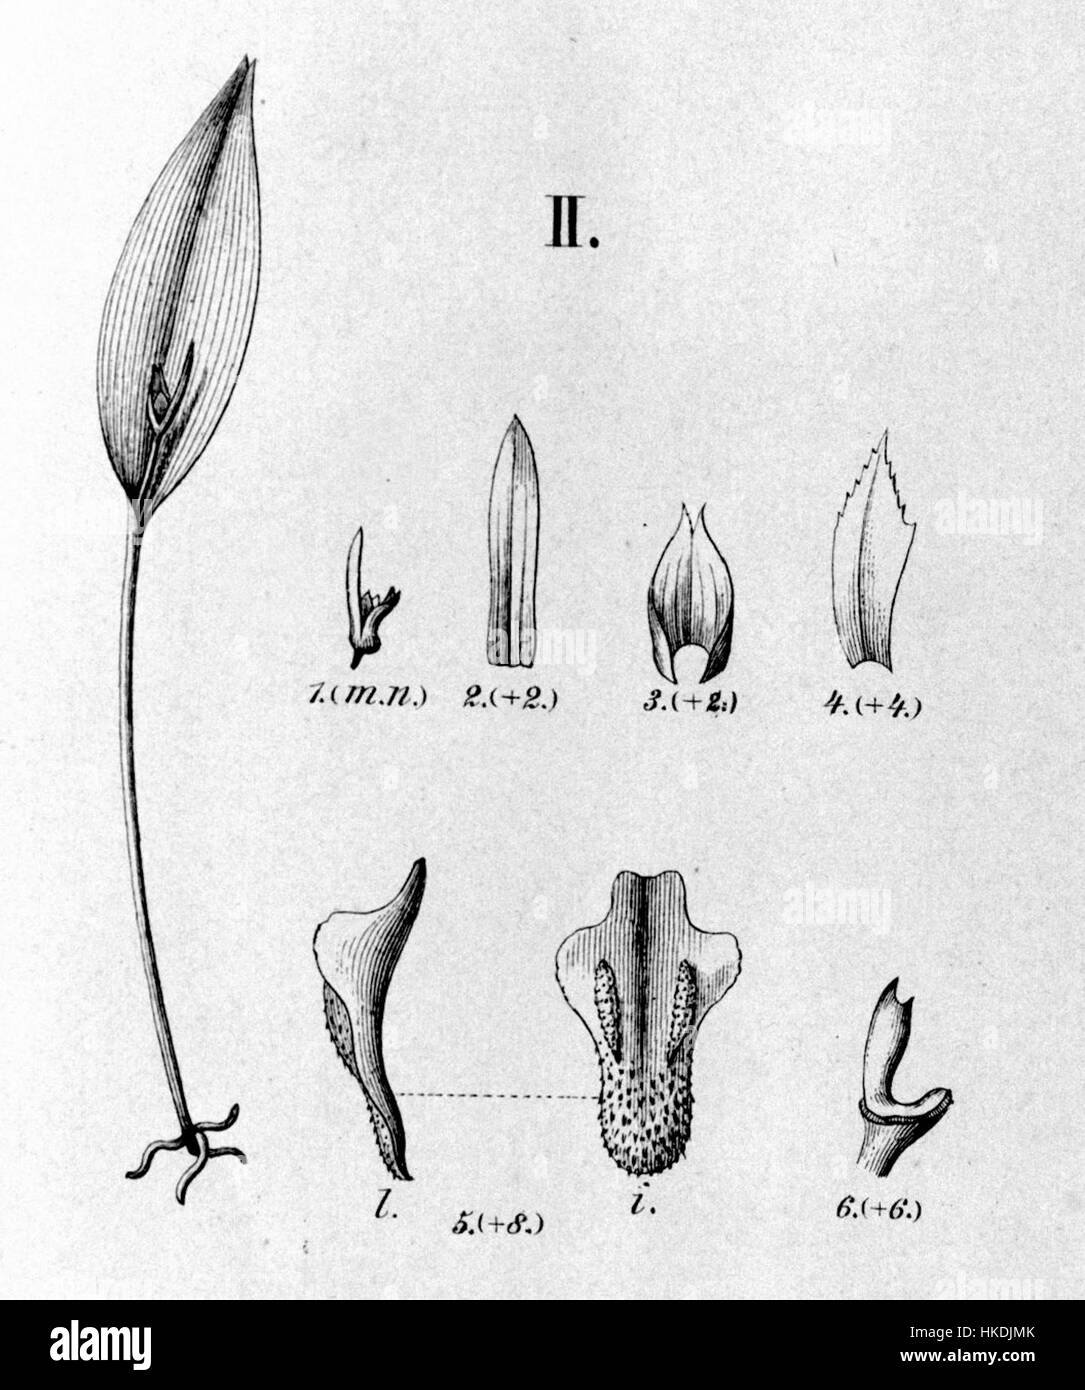 Acianthera miqueliana (come Pleurothallis longisepala) taglio fl.br.3 4 116 fig II Foto Stock